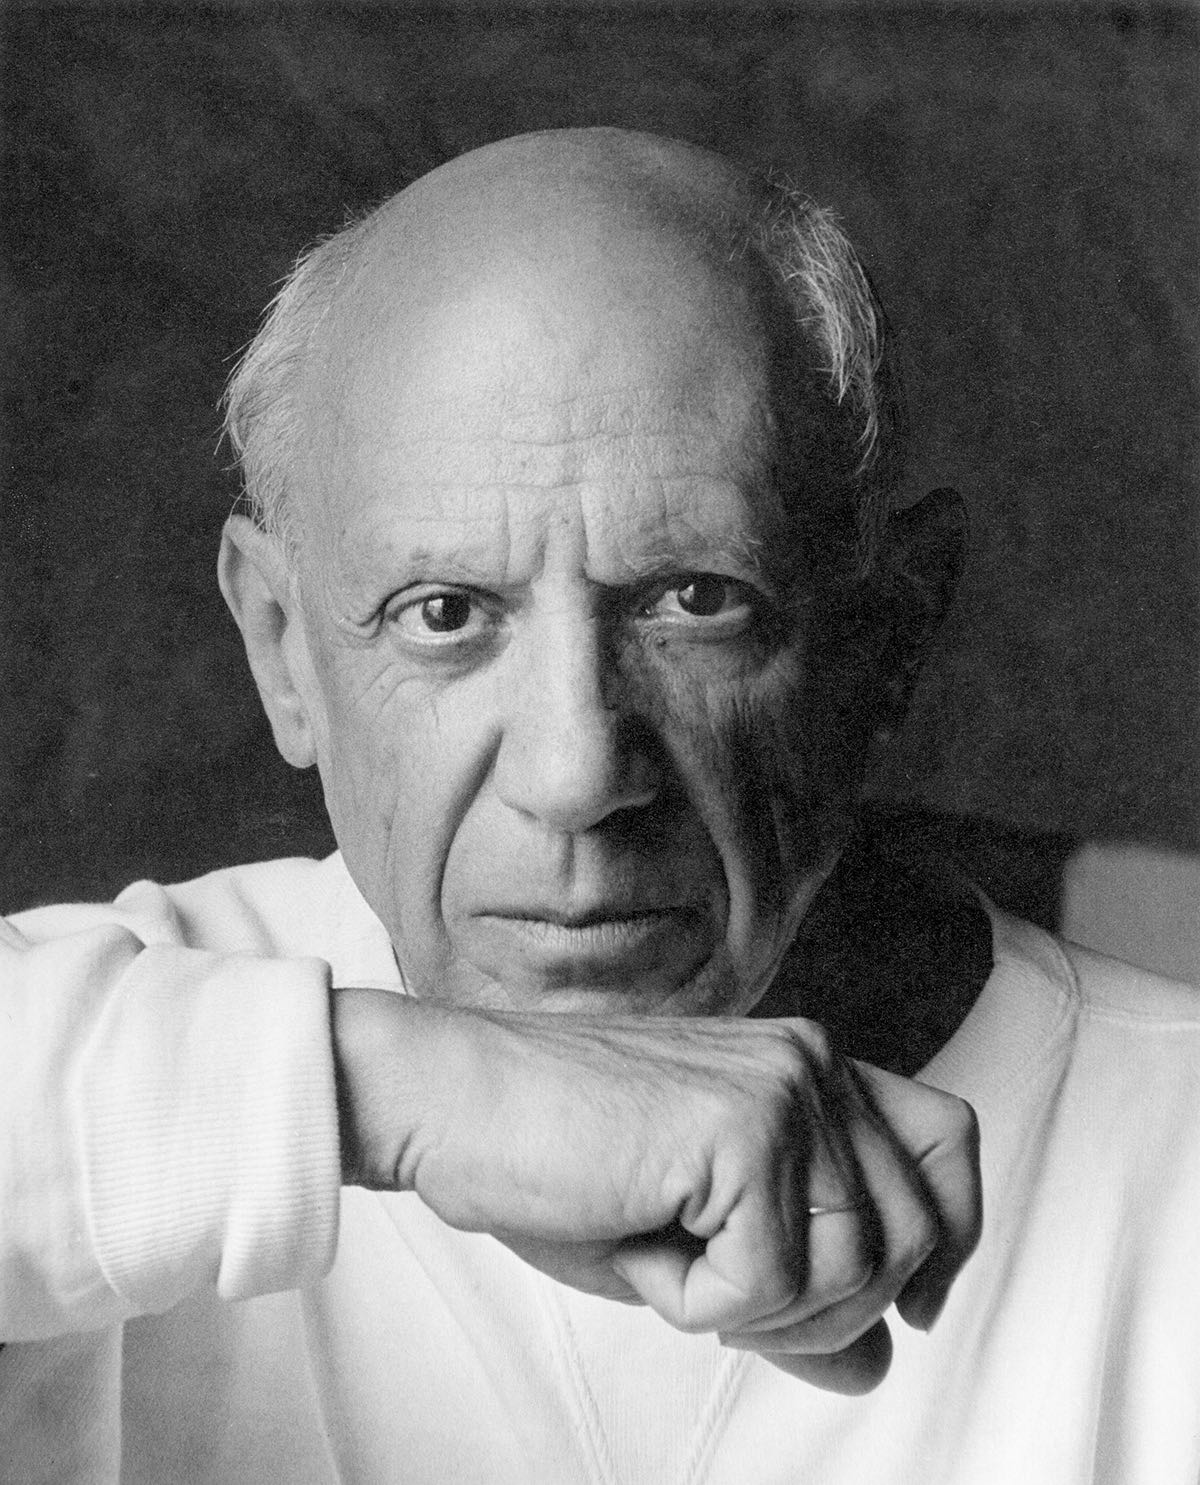 Portrait of artist Pablo Picasso June 2, 1954 in Vallauris, France